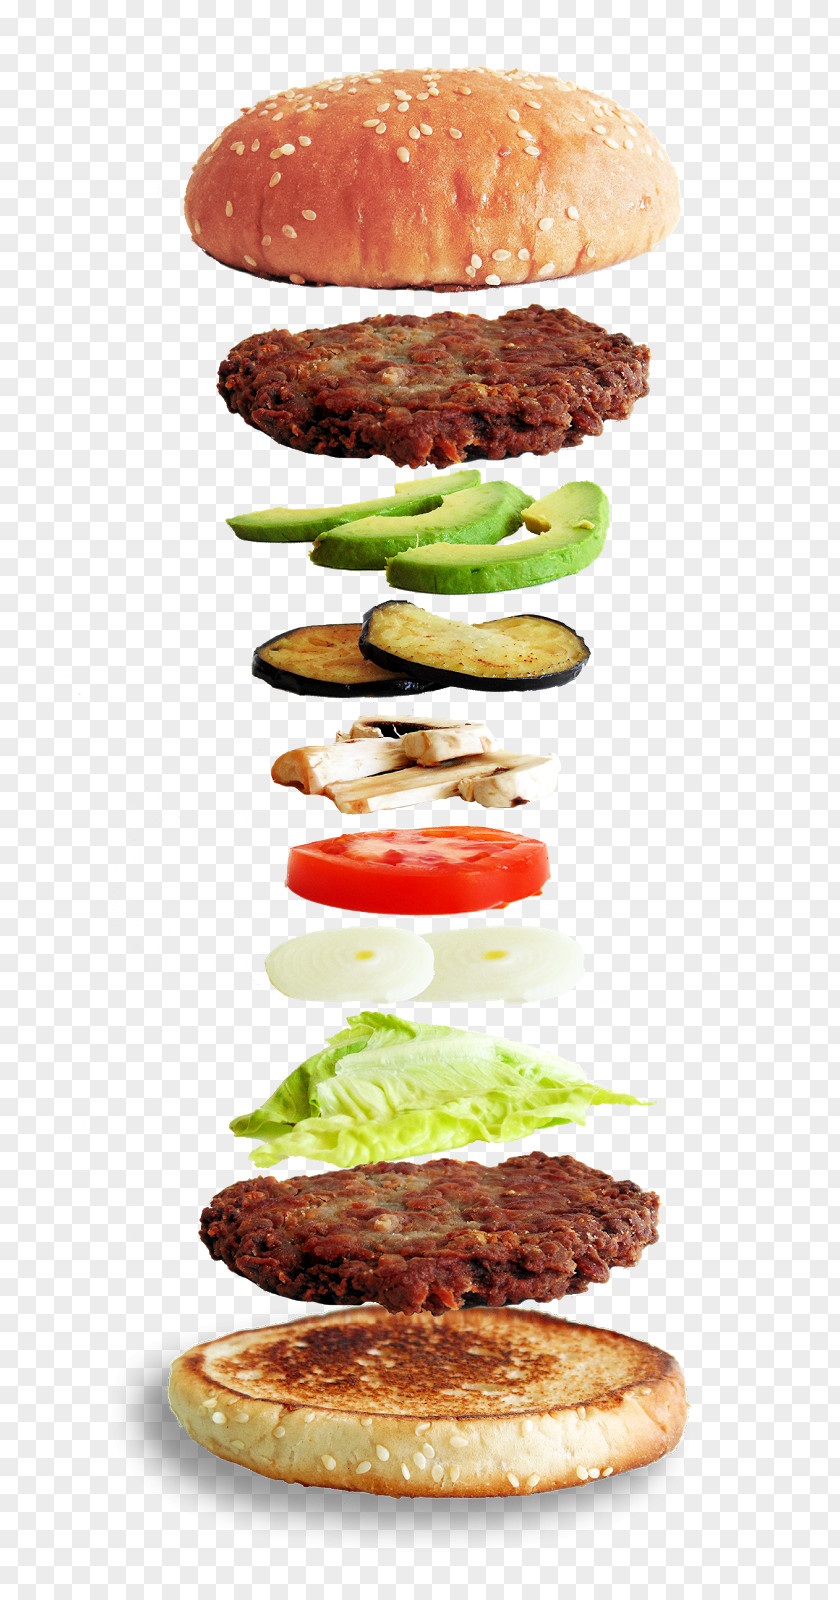 Burger Hamburger Fast Food Veggie Cheeseburger Breakfast Sandwich PNG